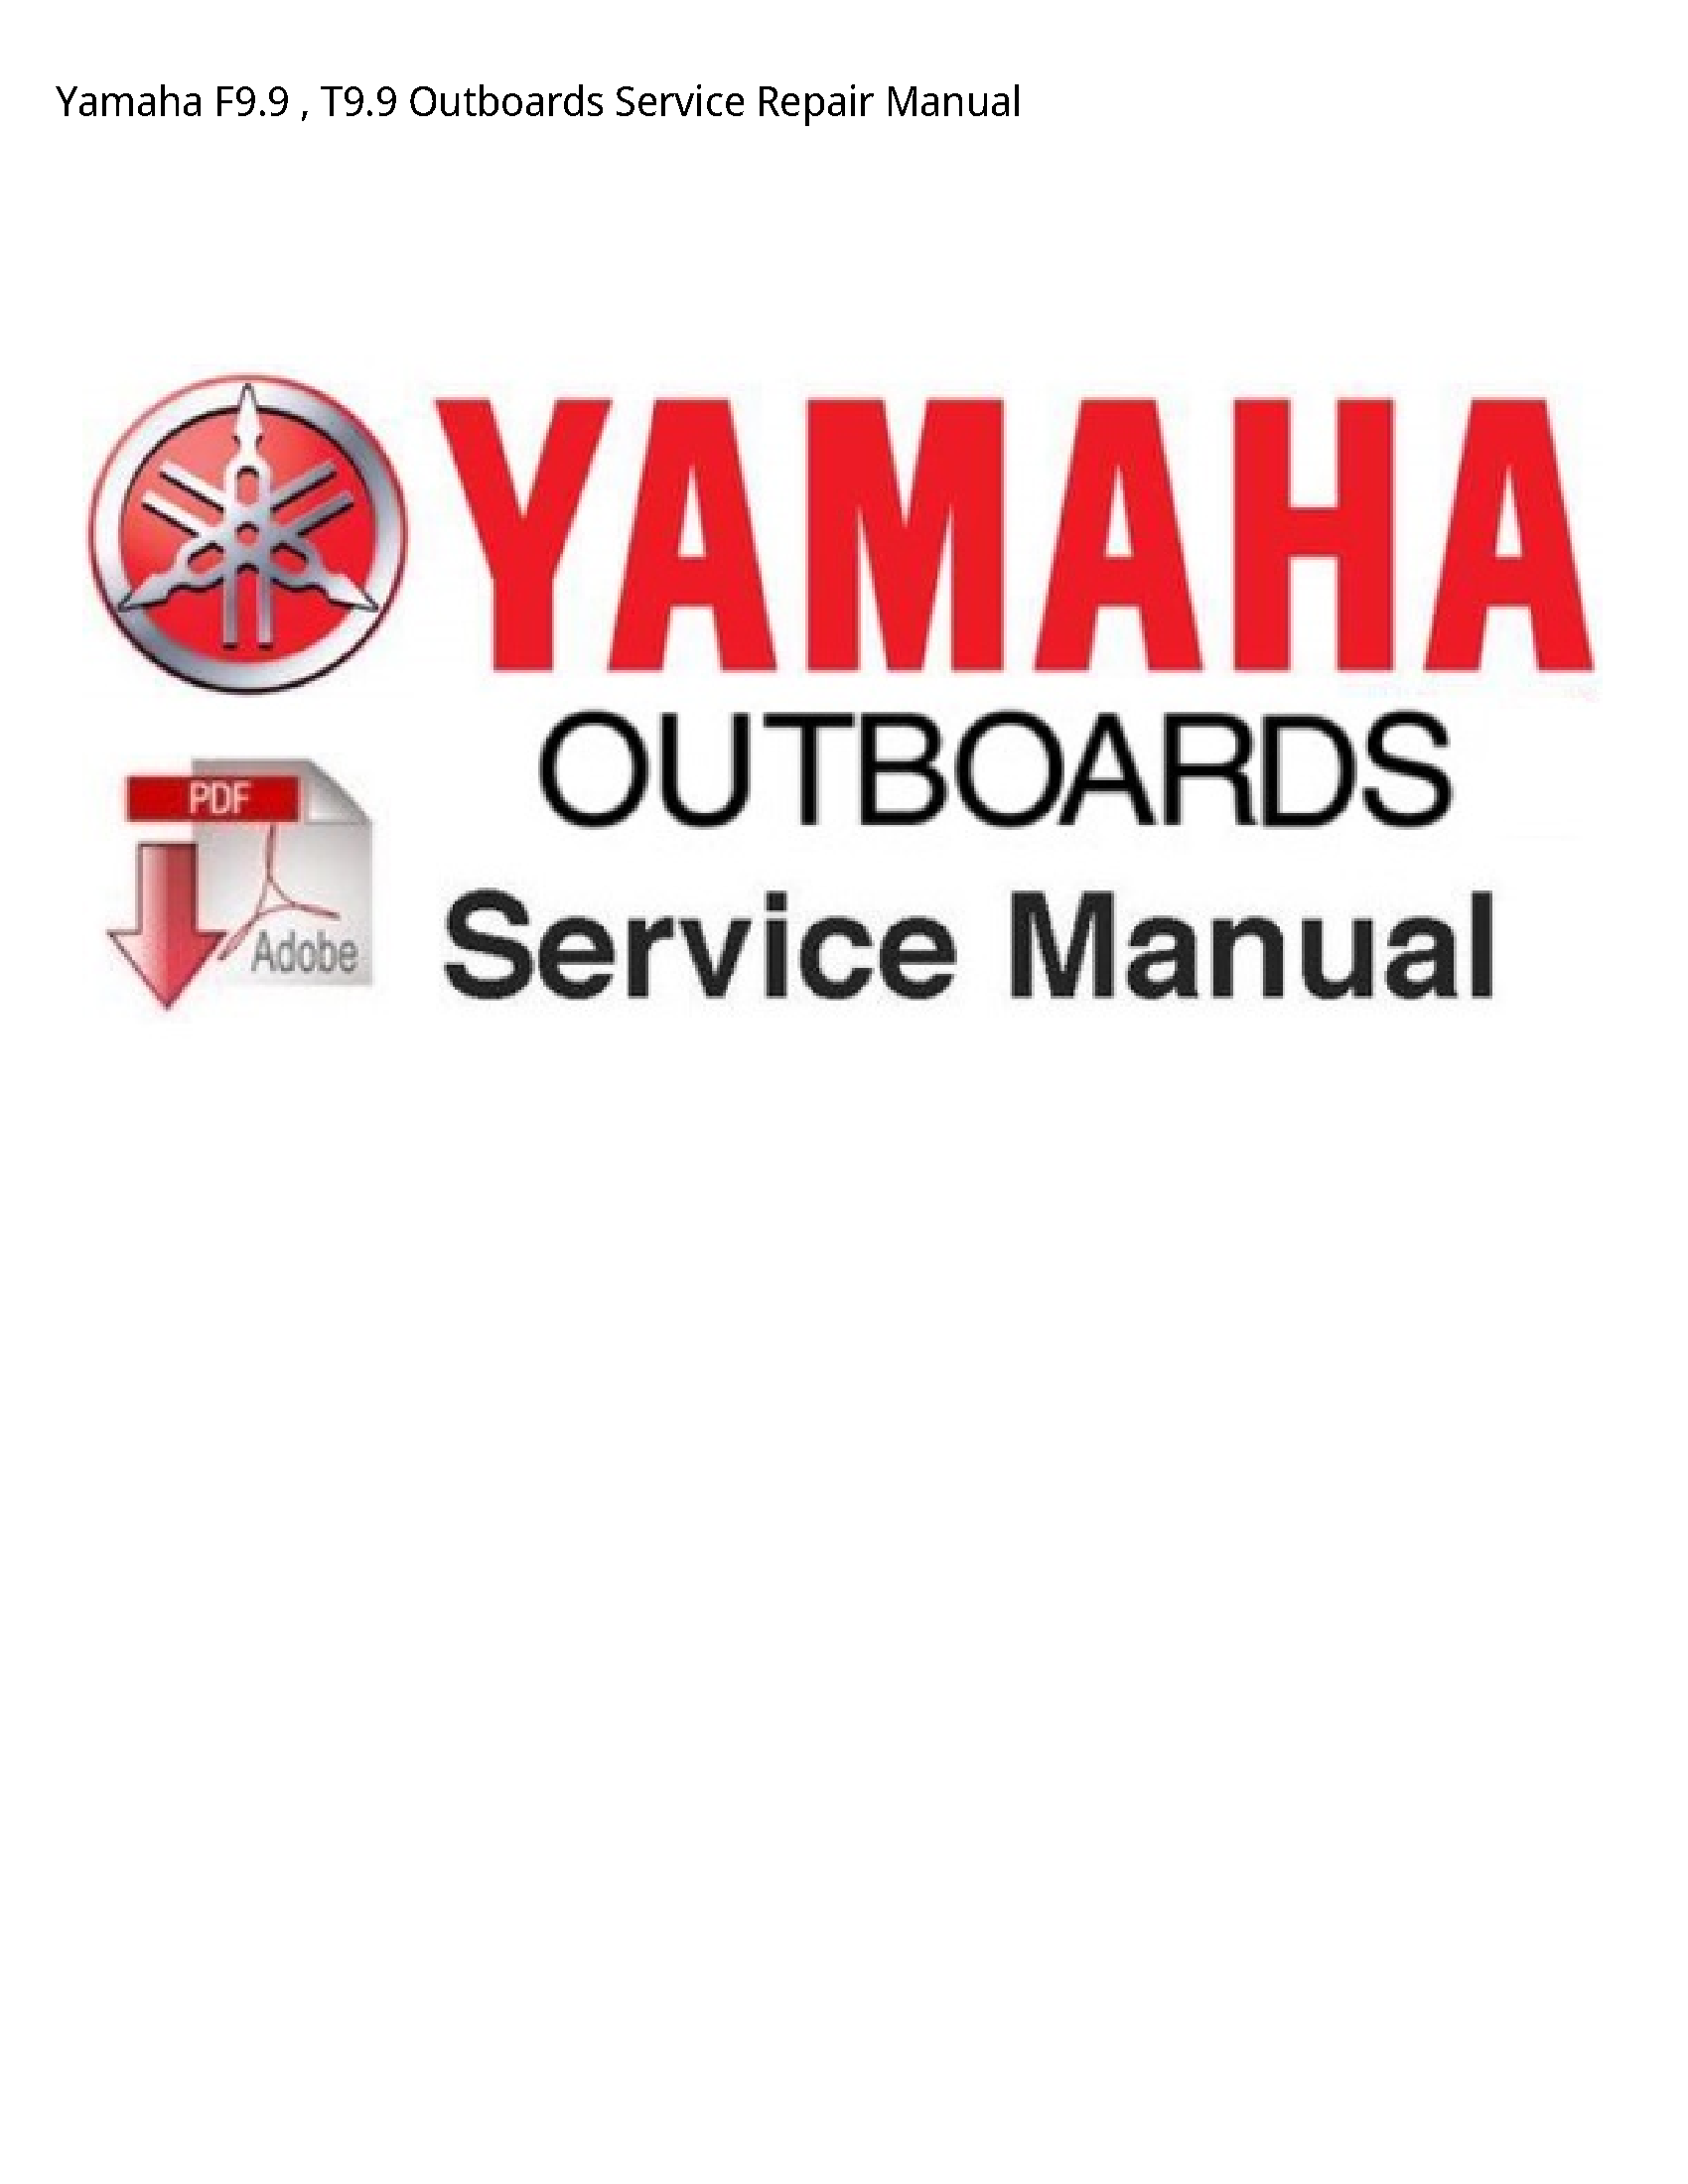 Yamaha F9.9 Outboards manual